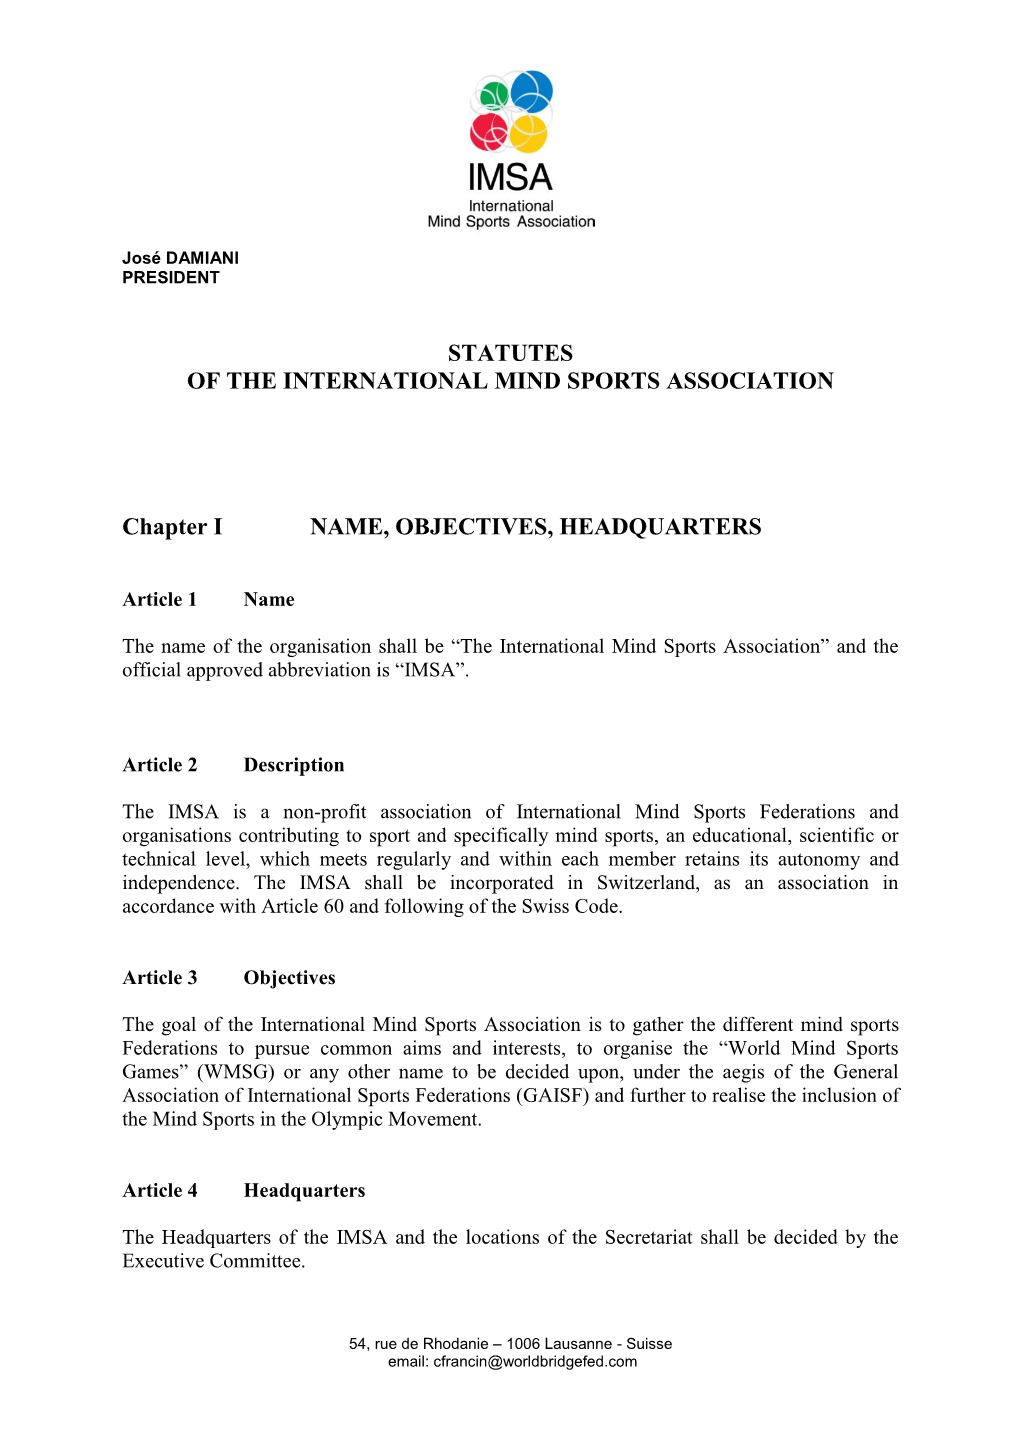 Statutes of the International Mind Sports Association